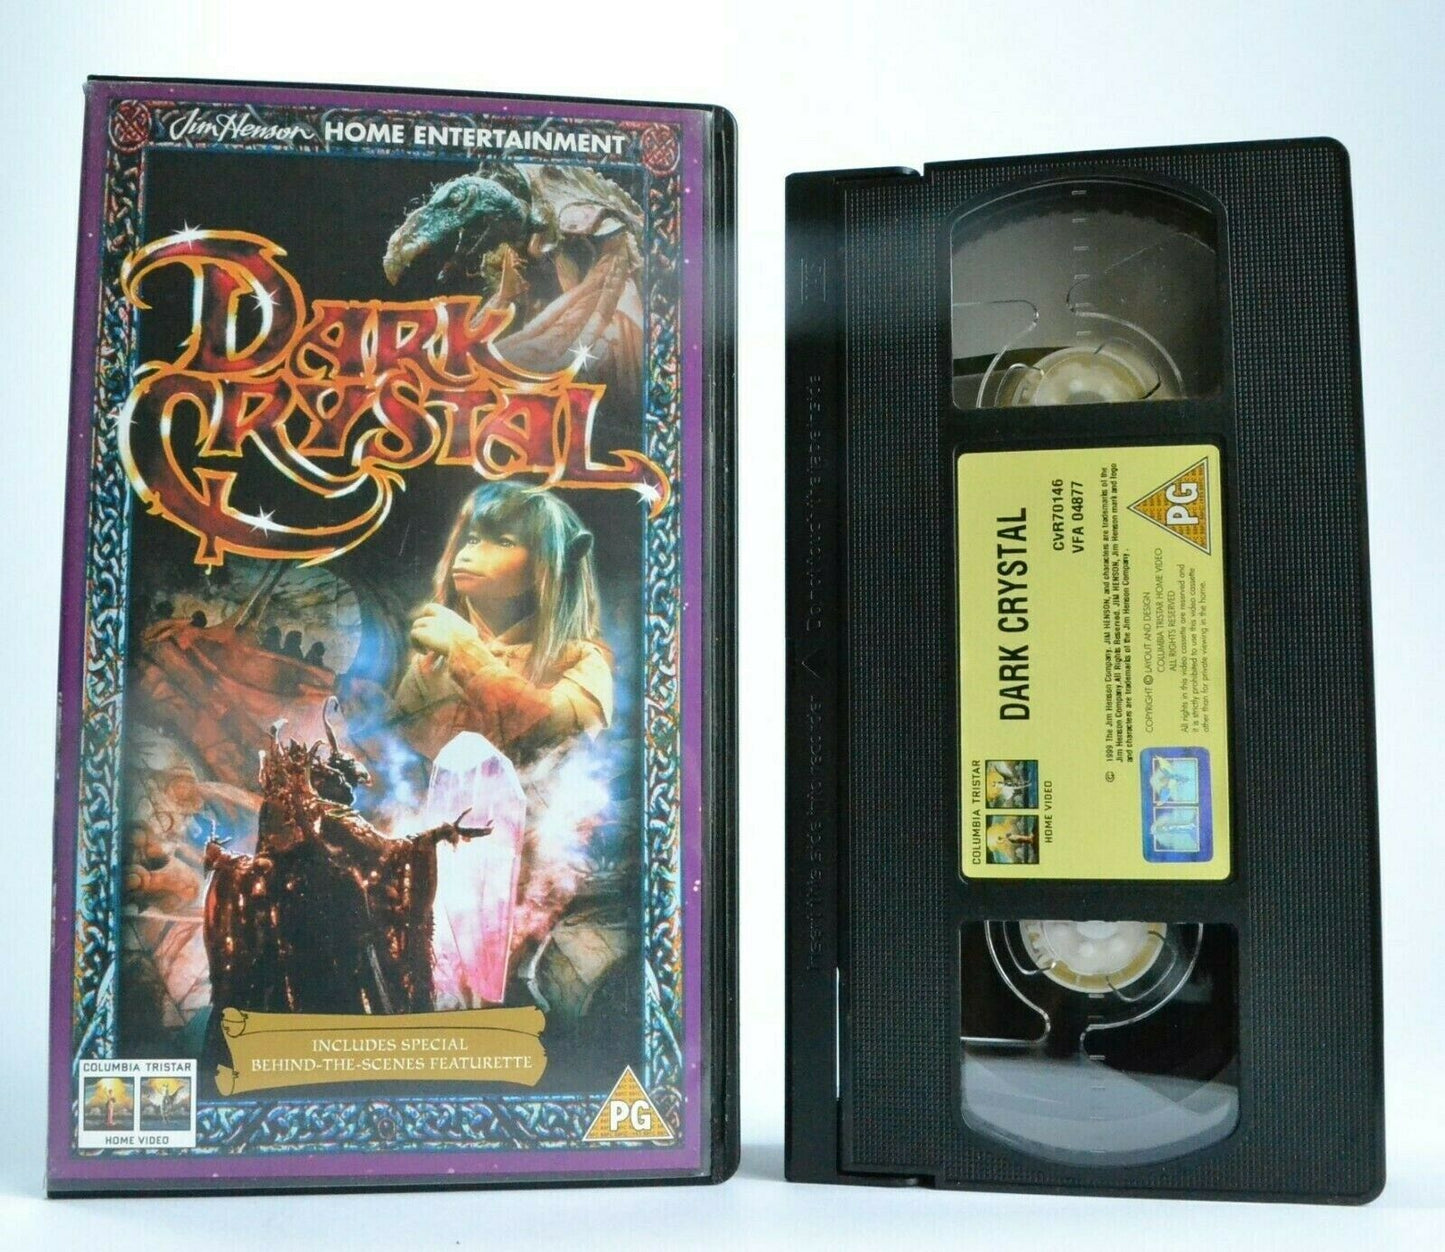 Dark Crystal (1982): Puppet Animated Fantasy - Jim Henson/Frank Oz - Kids - VHS-